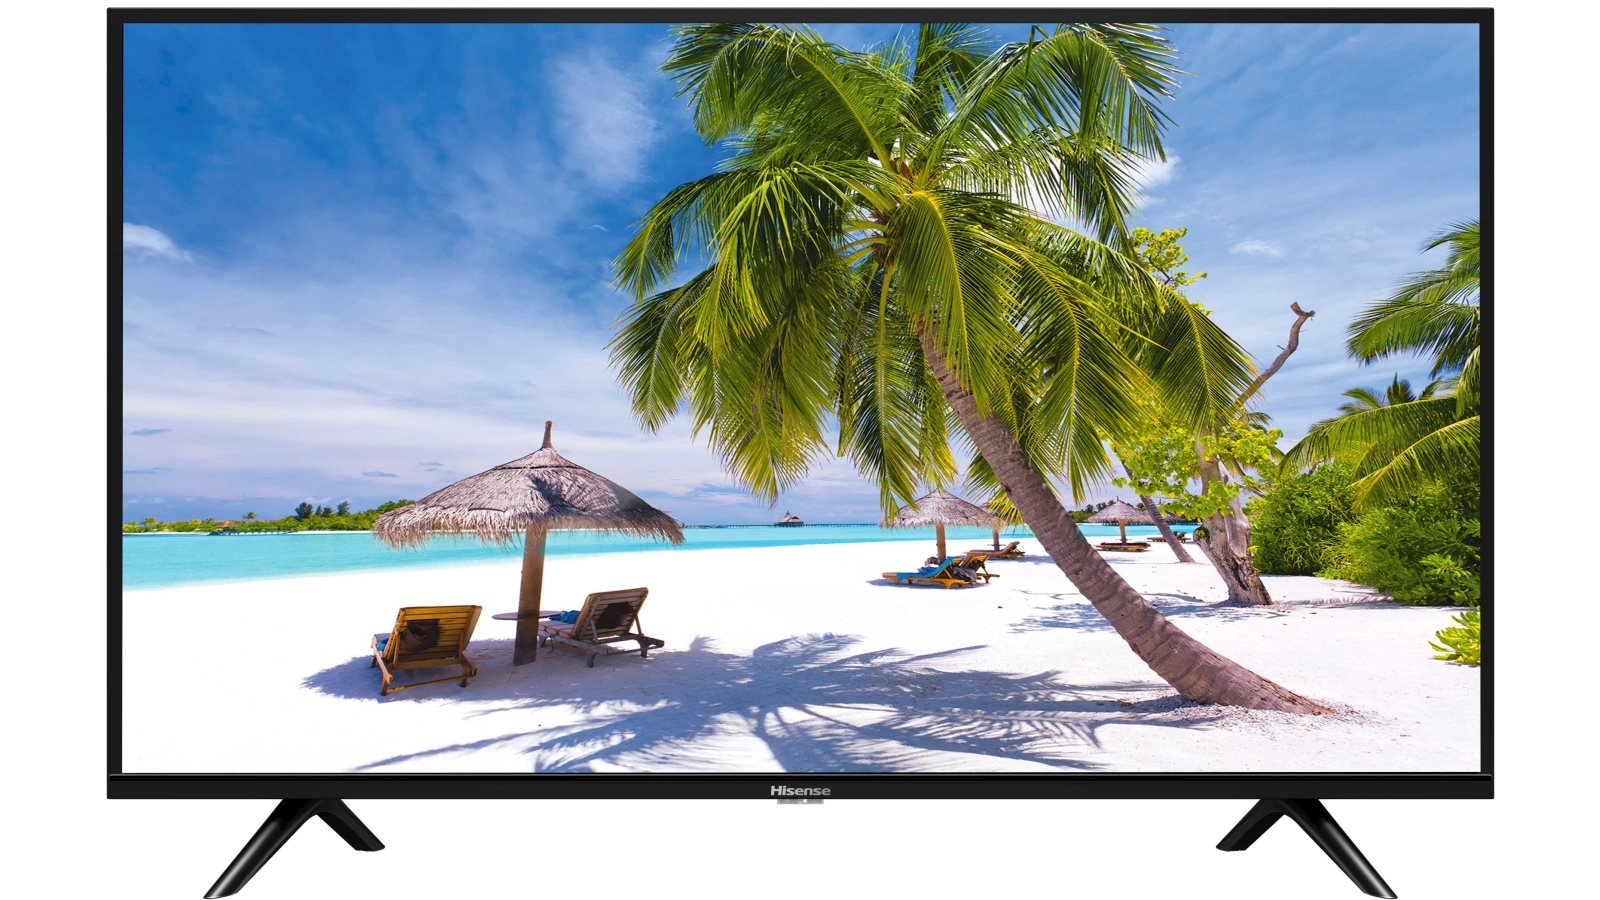 Hisense 32 Inch smart TV in Kenya